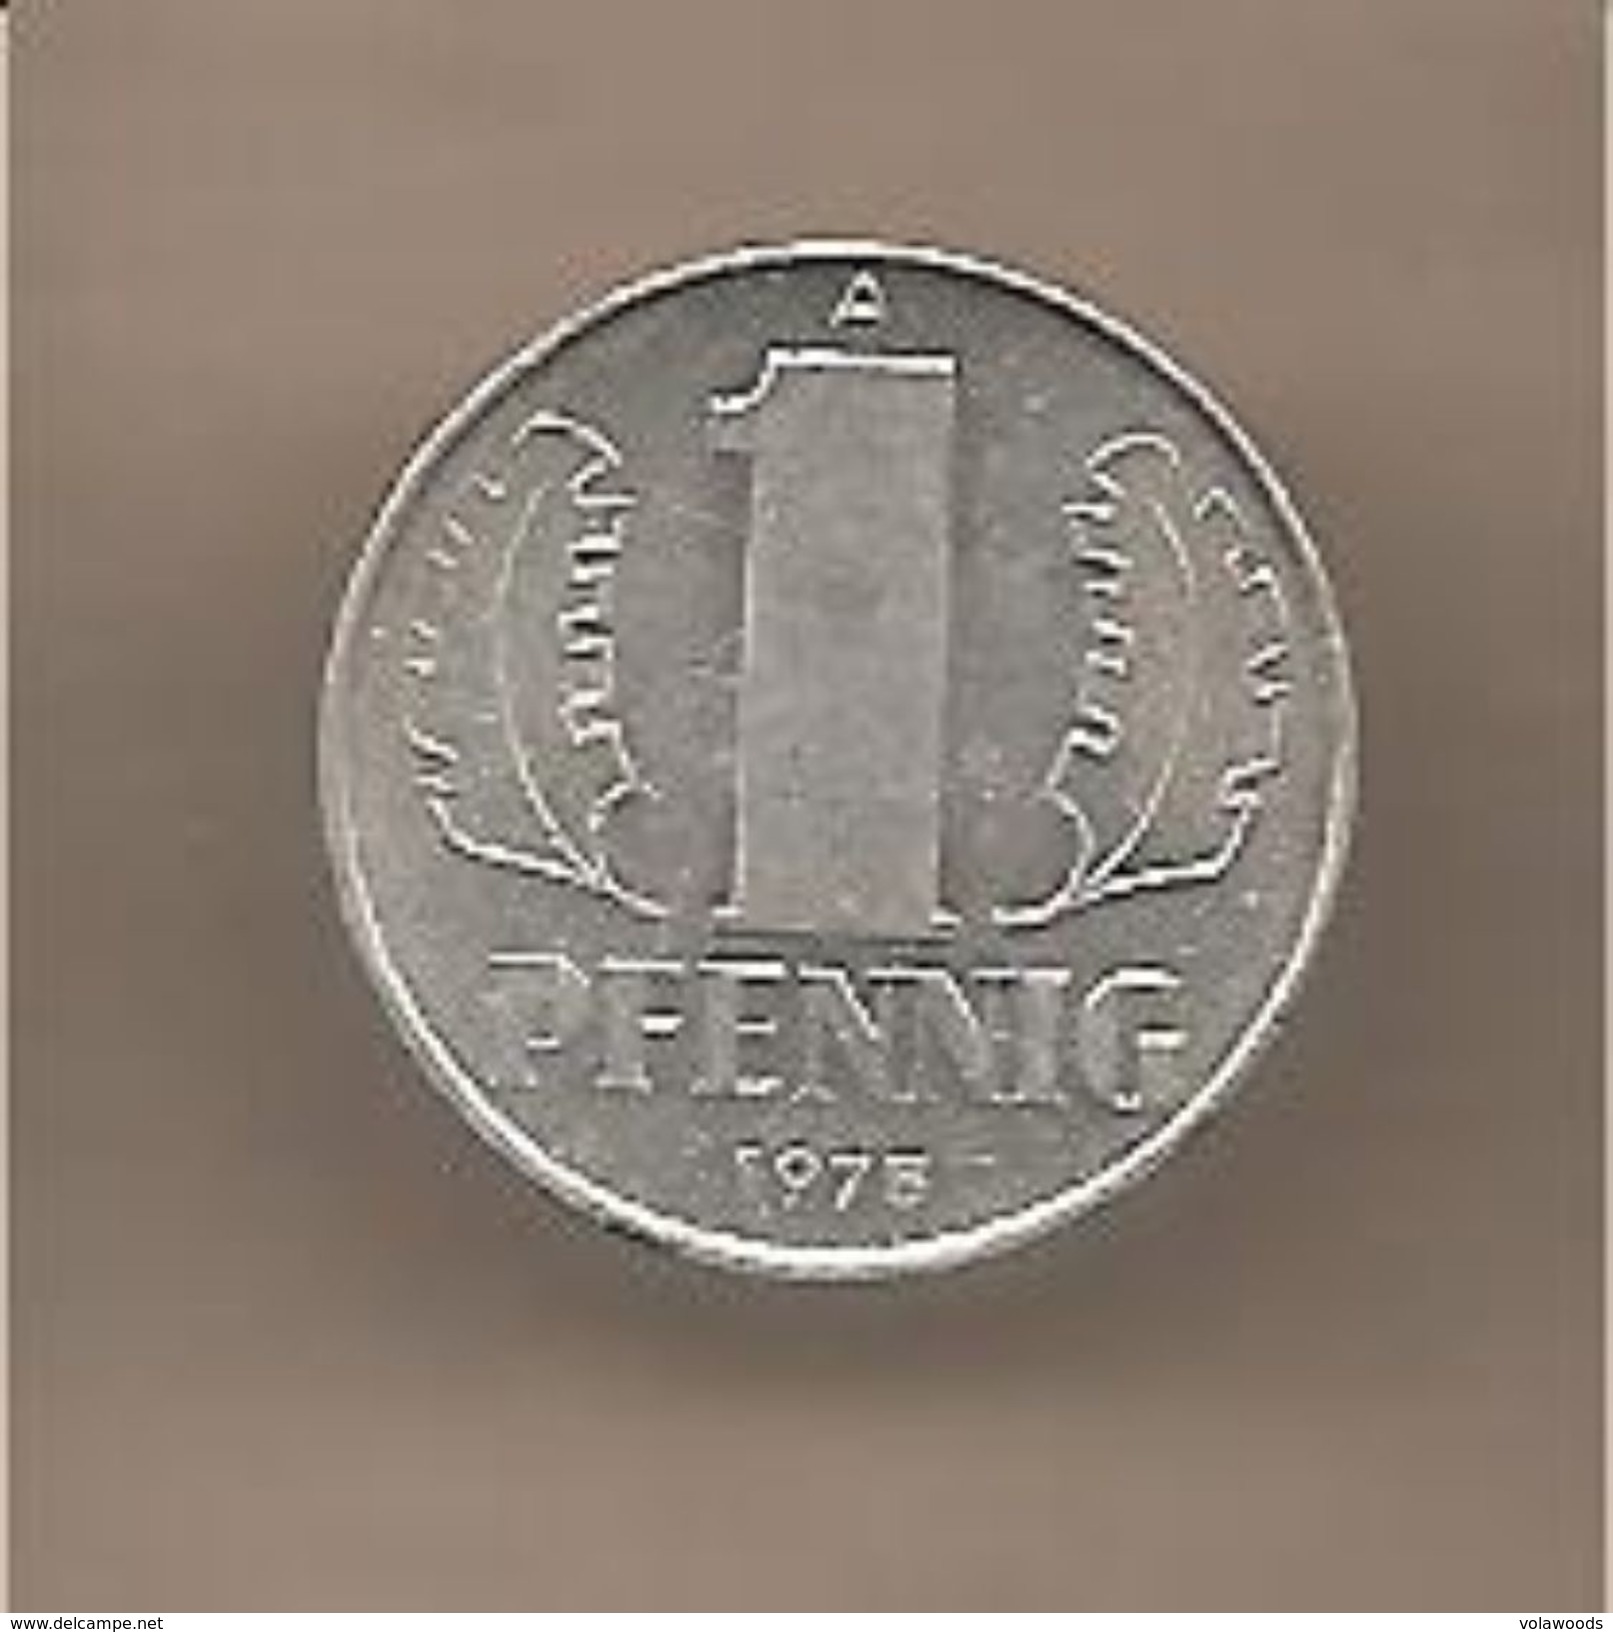 DDR - Moneta Circolata Da 1 Pfennig - 1975 Large Design - 1 Pfennig